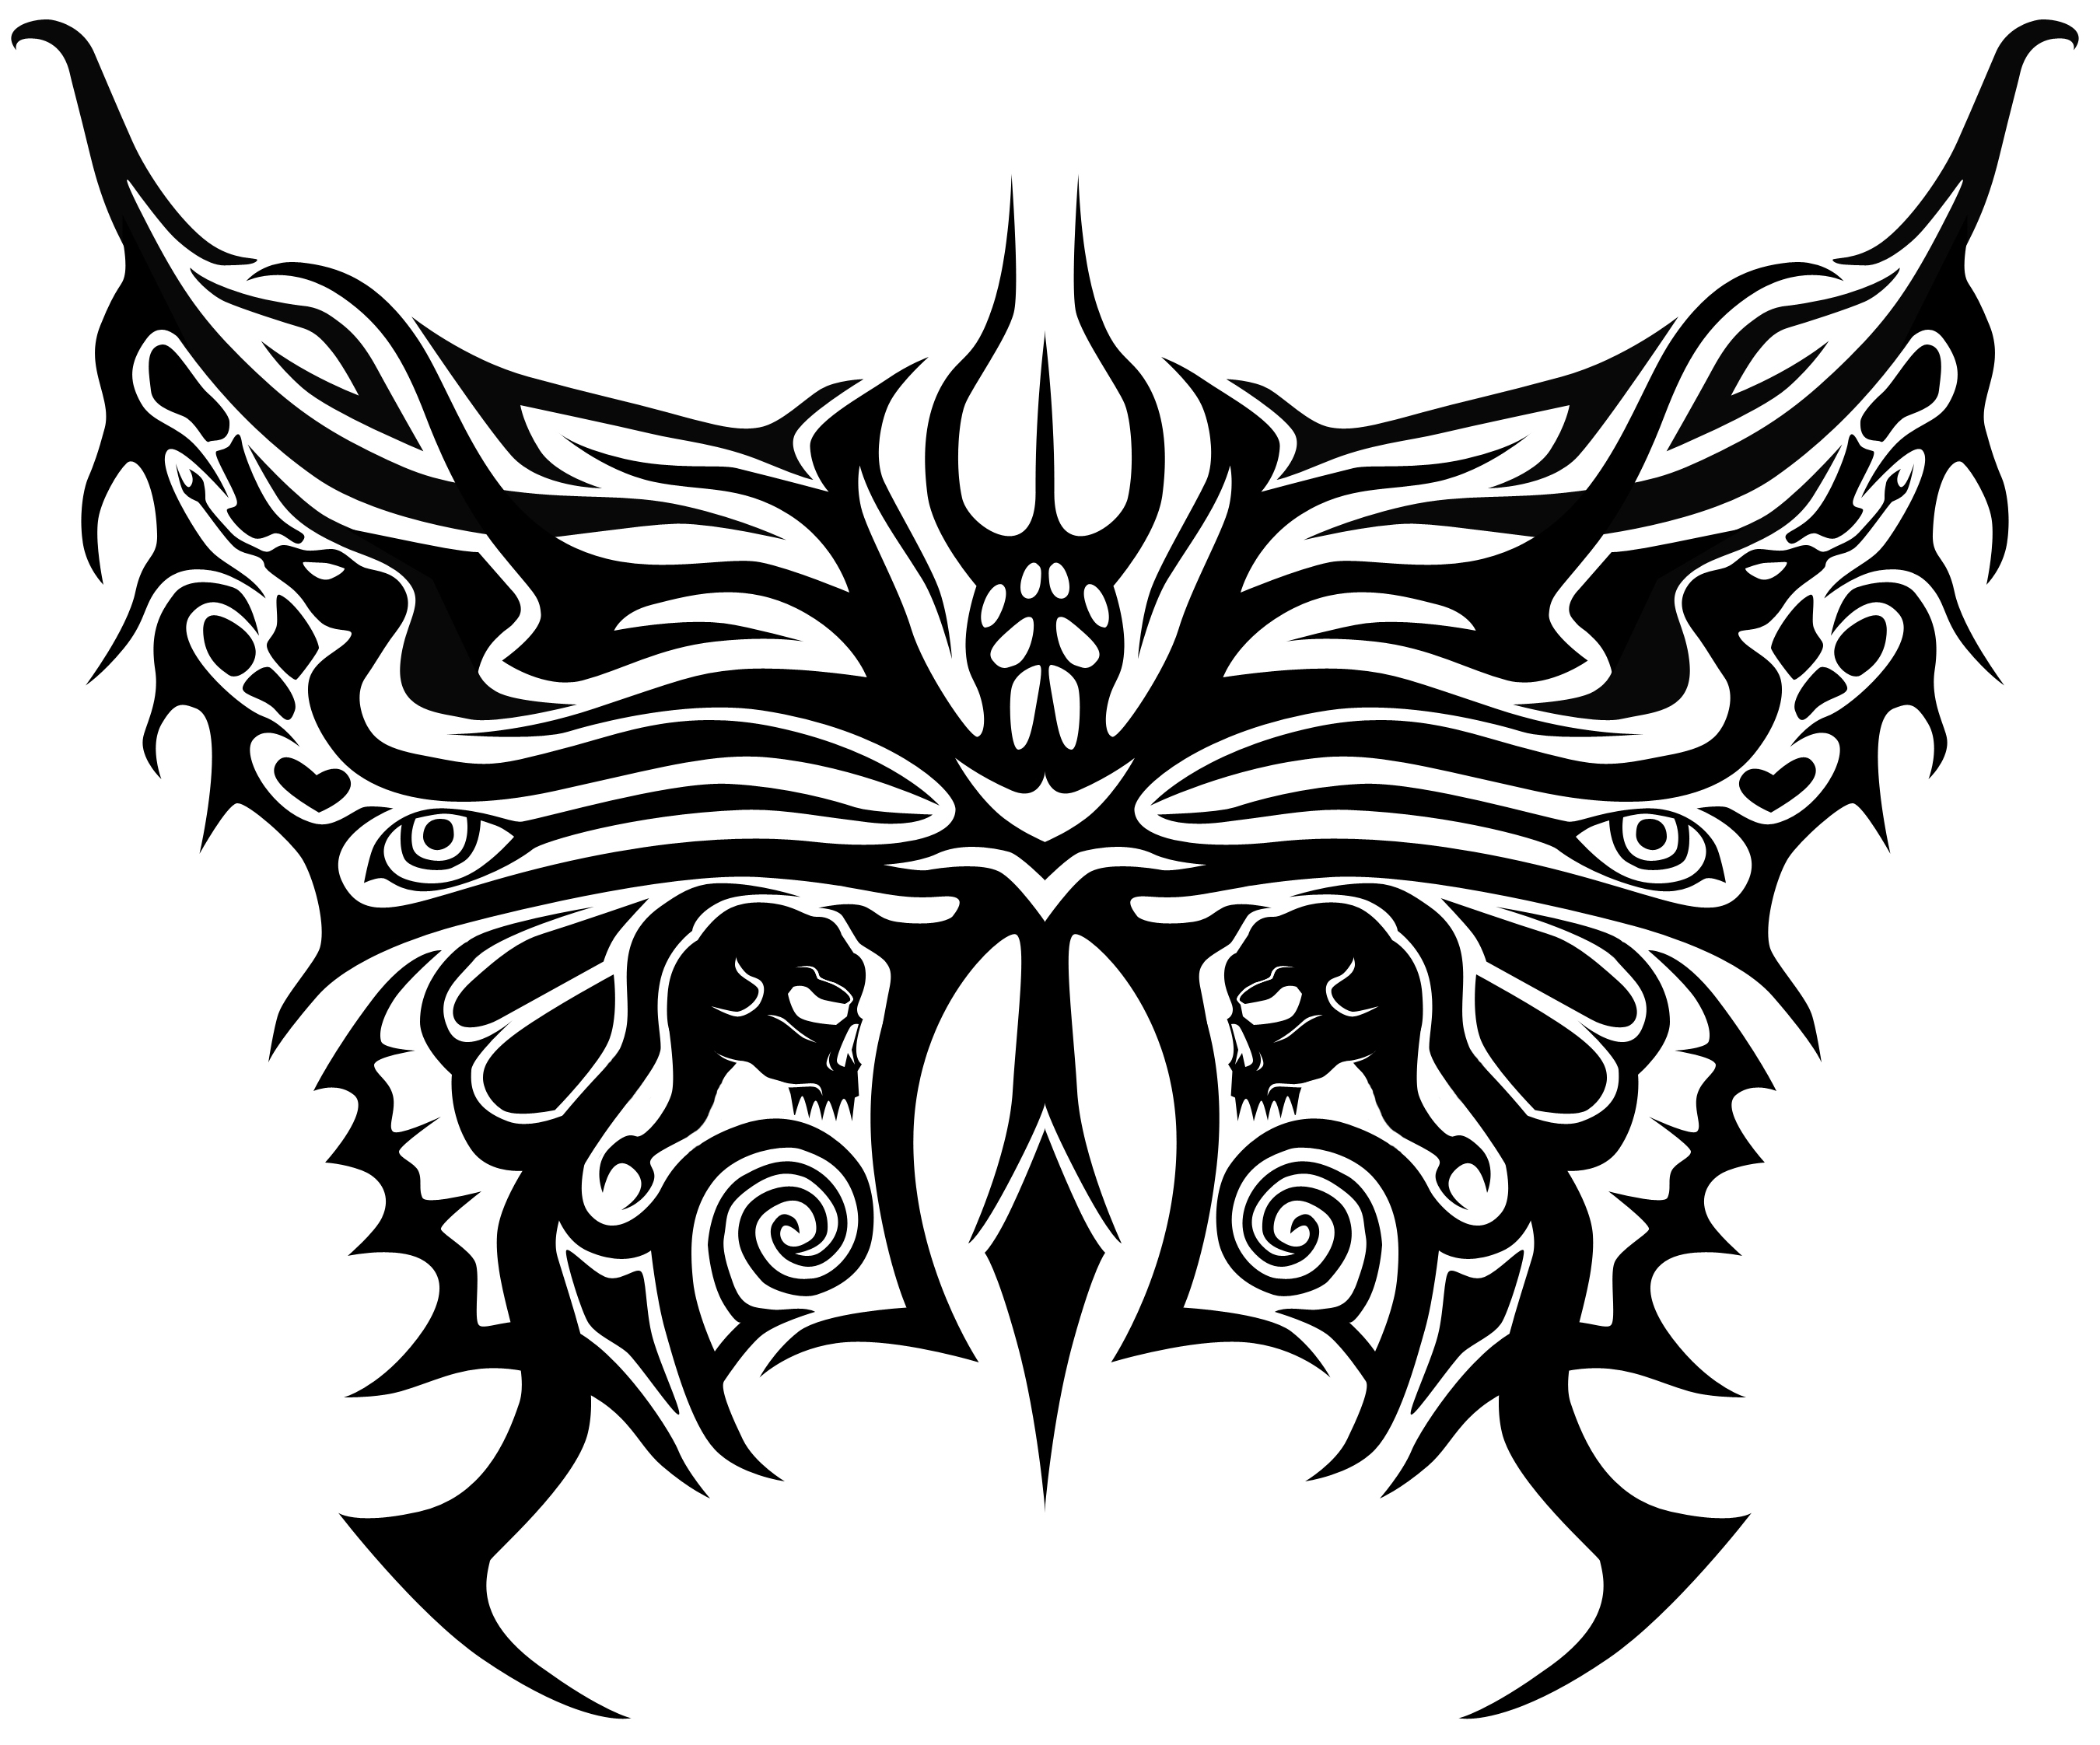 Tribal Butterfly Tattoos Ideas and Design - Tattoos Blog | Tattoos ...